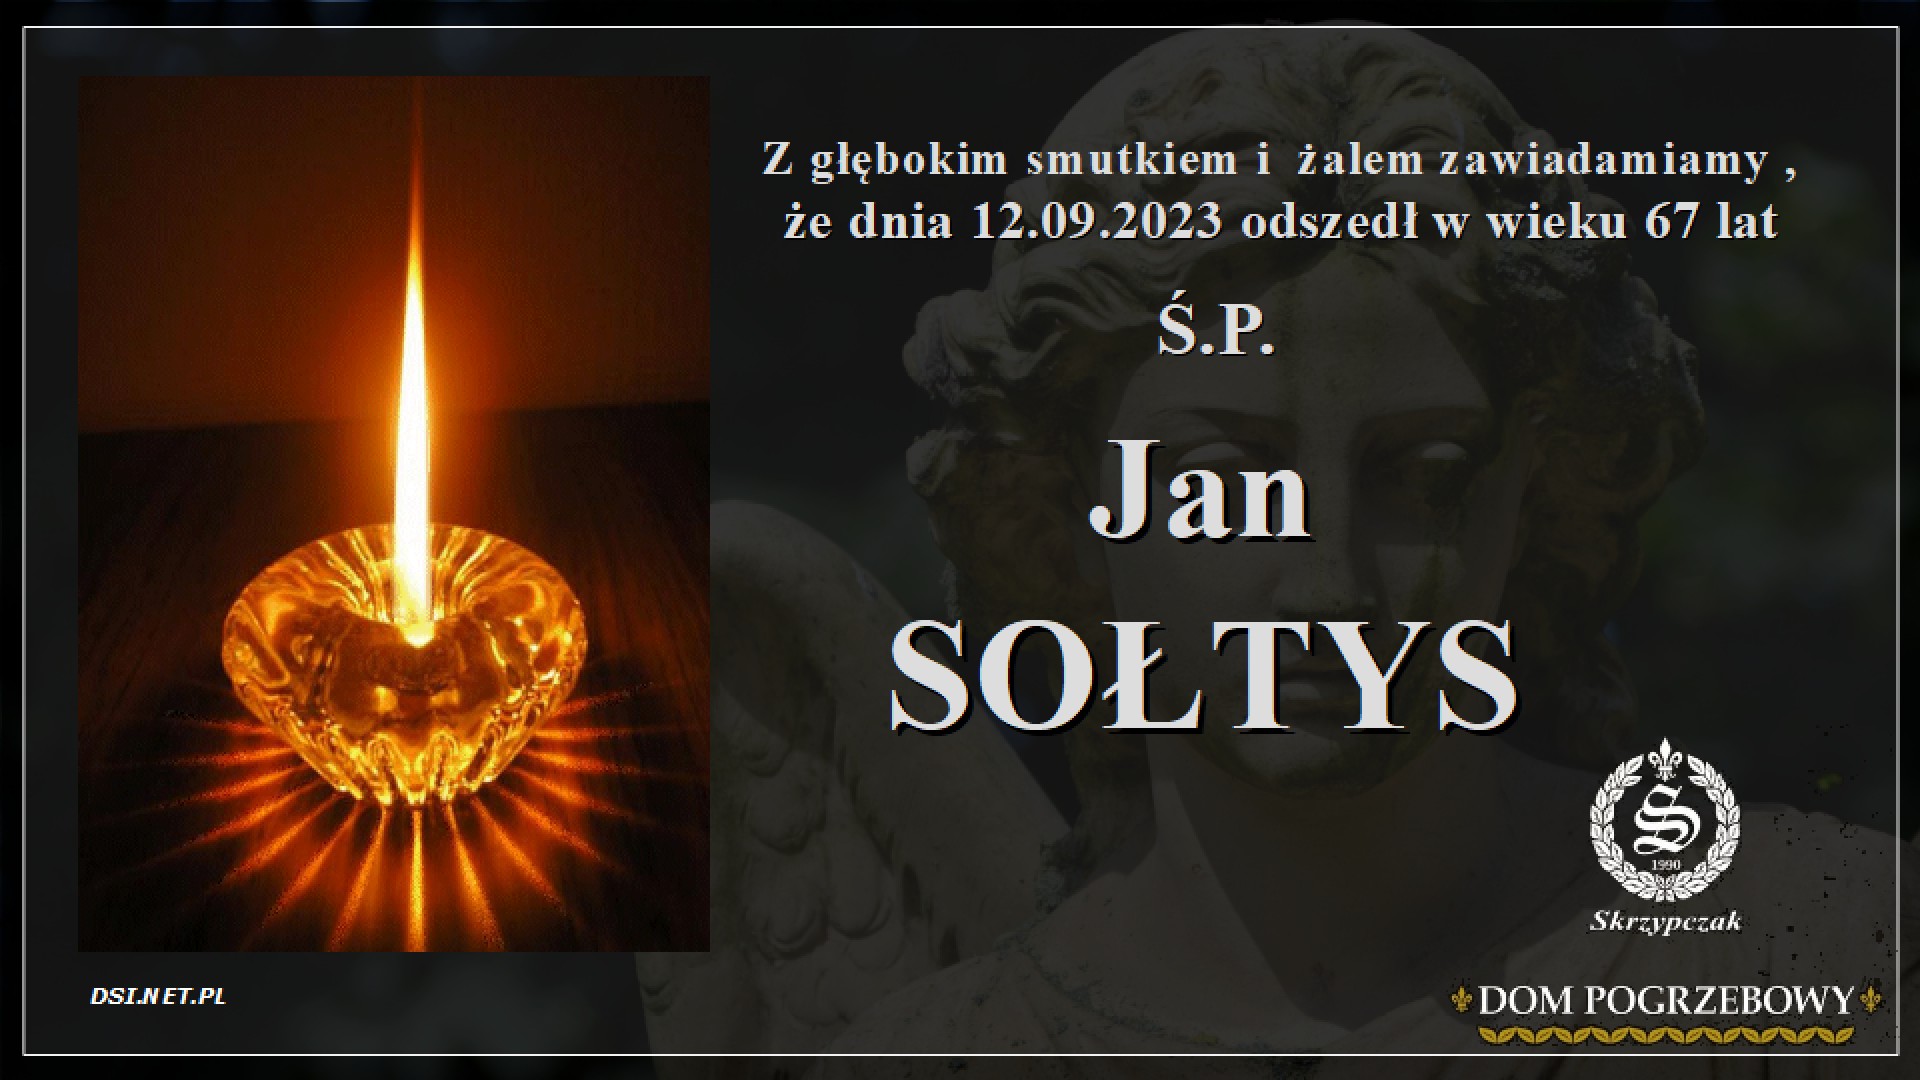 Ś.P. Jan Sołtys